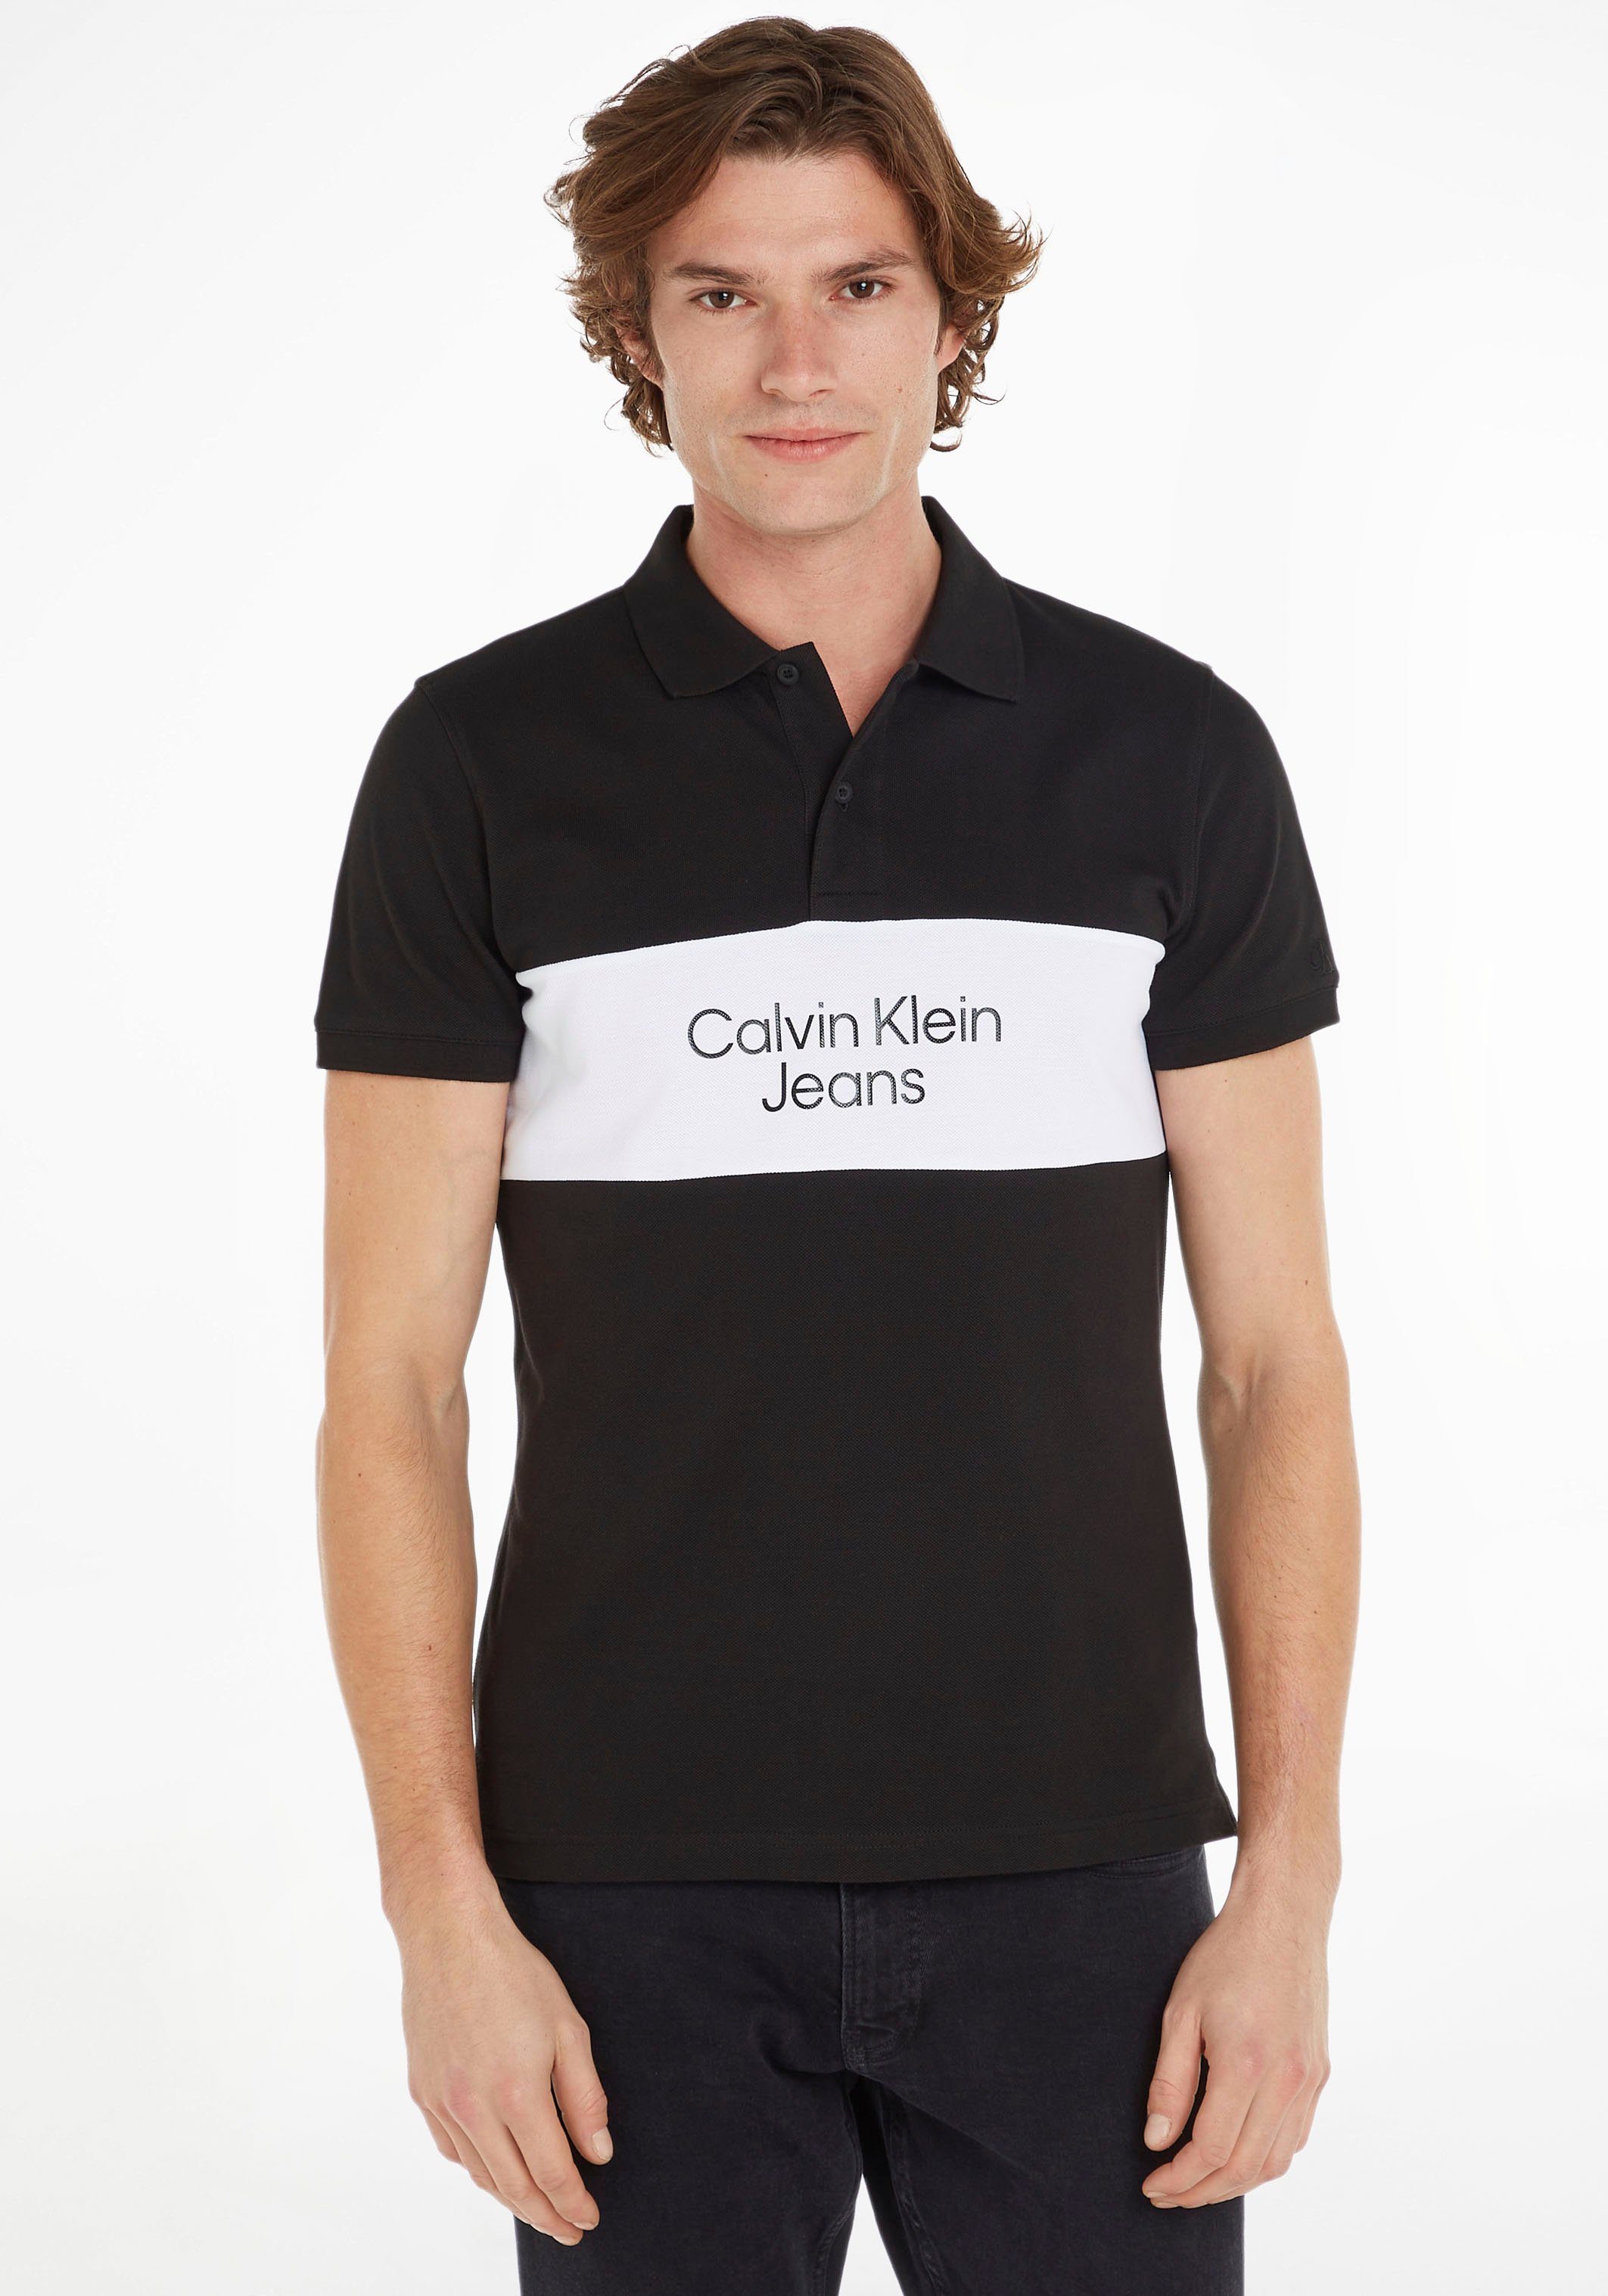 COLORBLOCK Poloshirt Logo Brust Calvin Calvin mit Klein Jeans Klein der POLO LOGO Colorblock auf